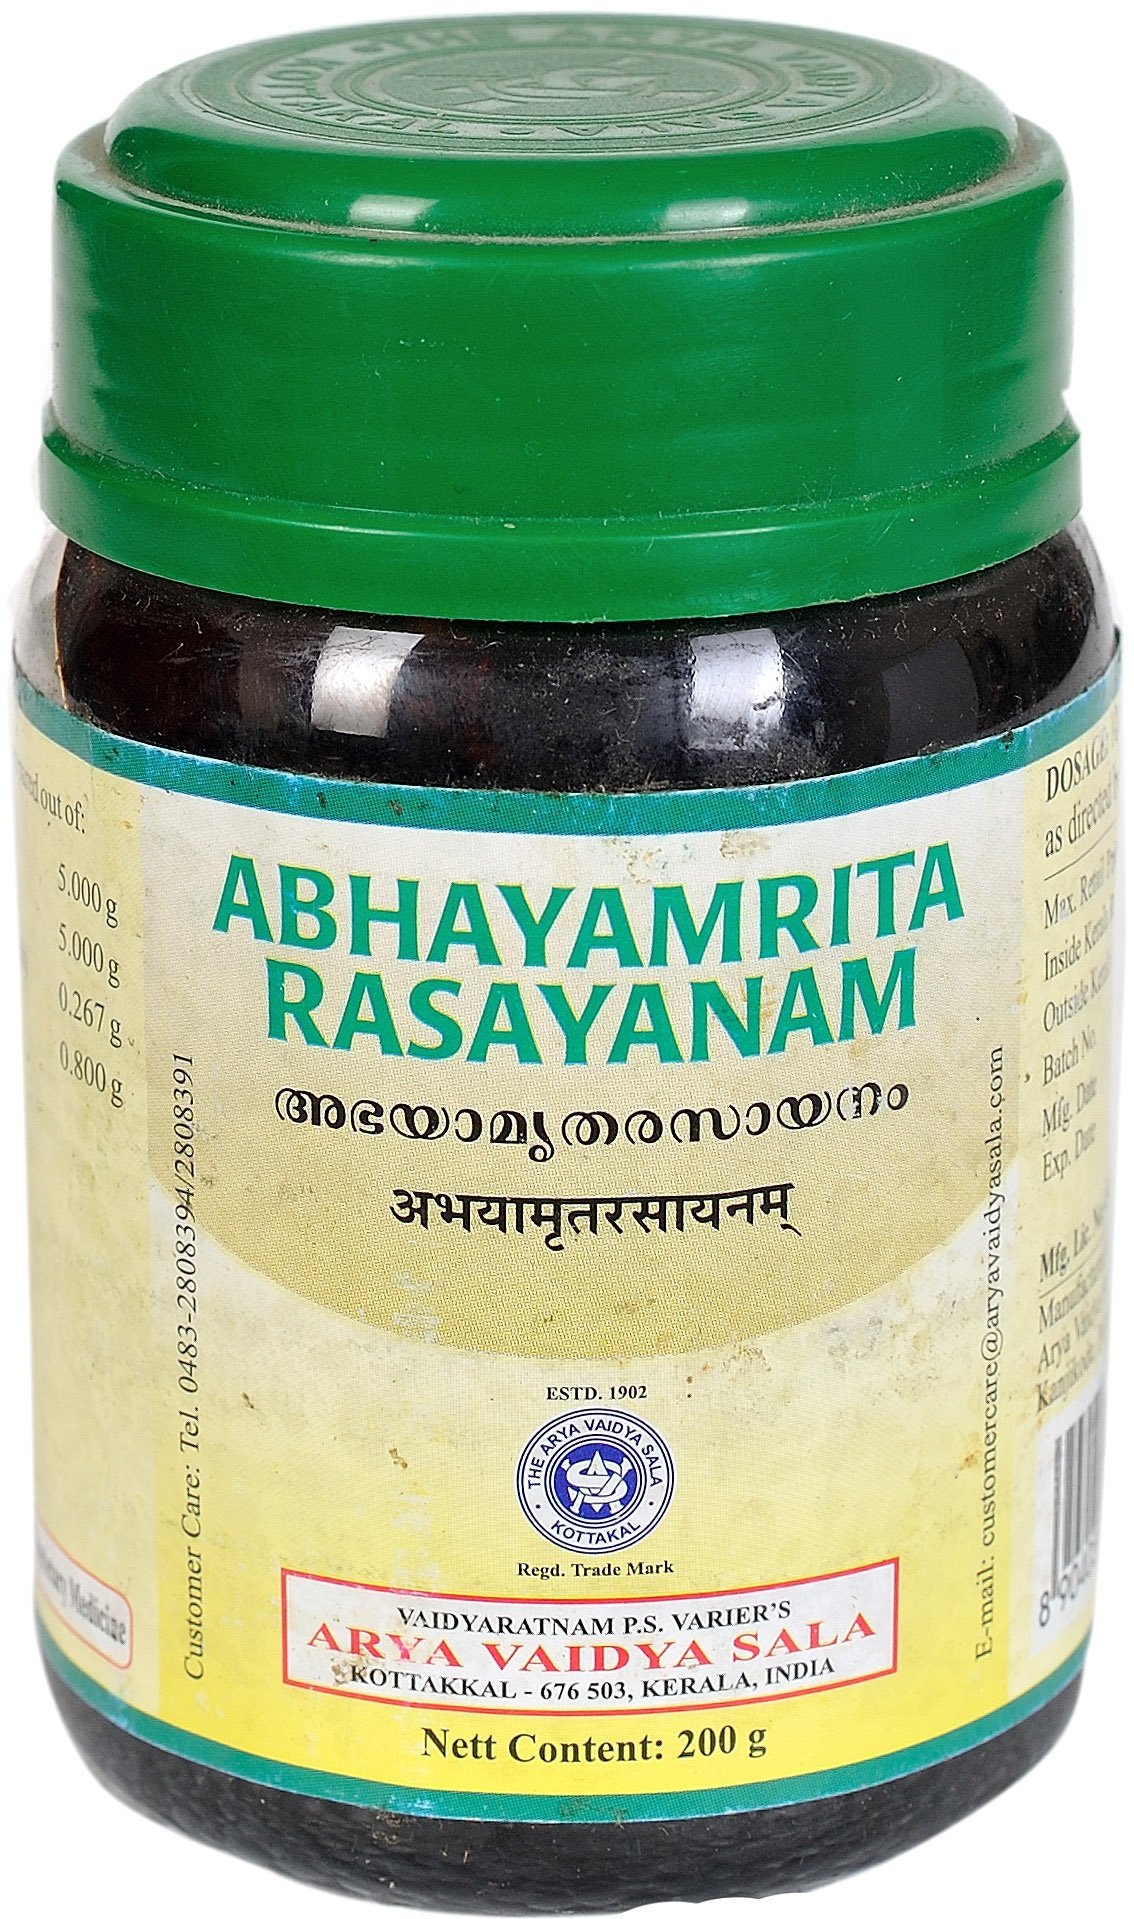 Abhayamrita Rasayanam - book cover